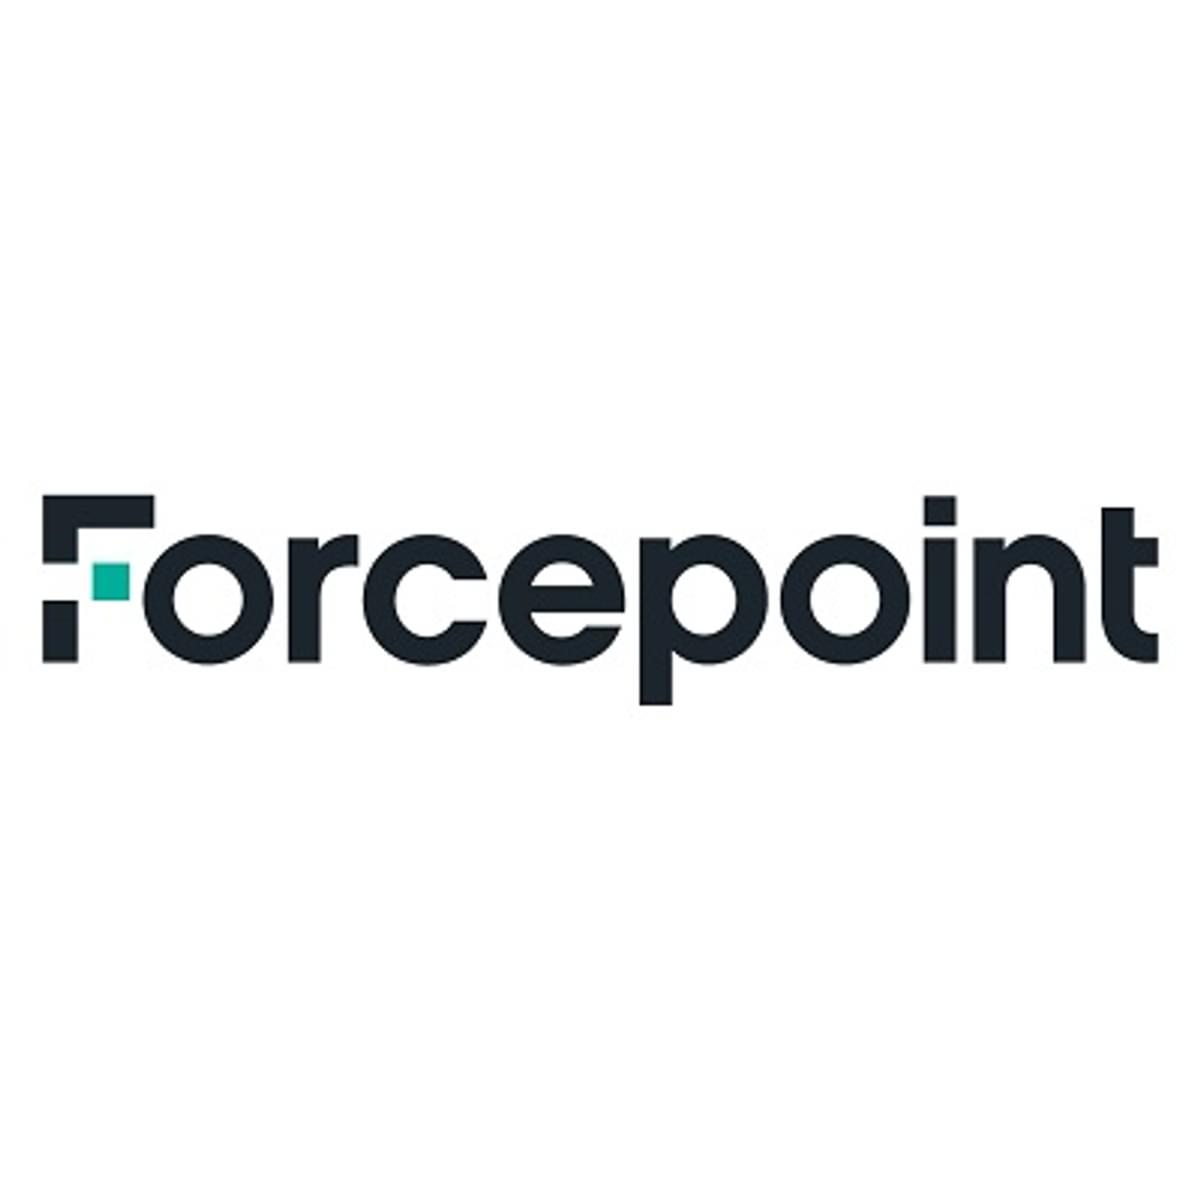 Francisco Partners neemt Forcepoint over van Raytheon Technologies image